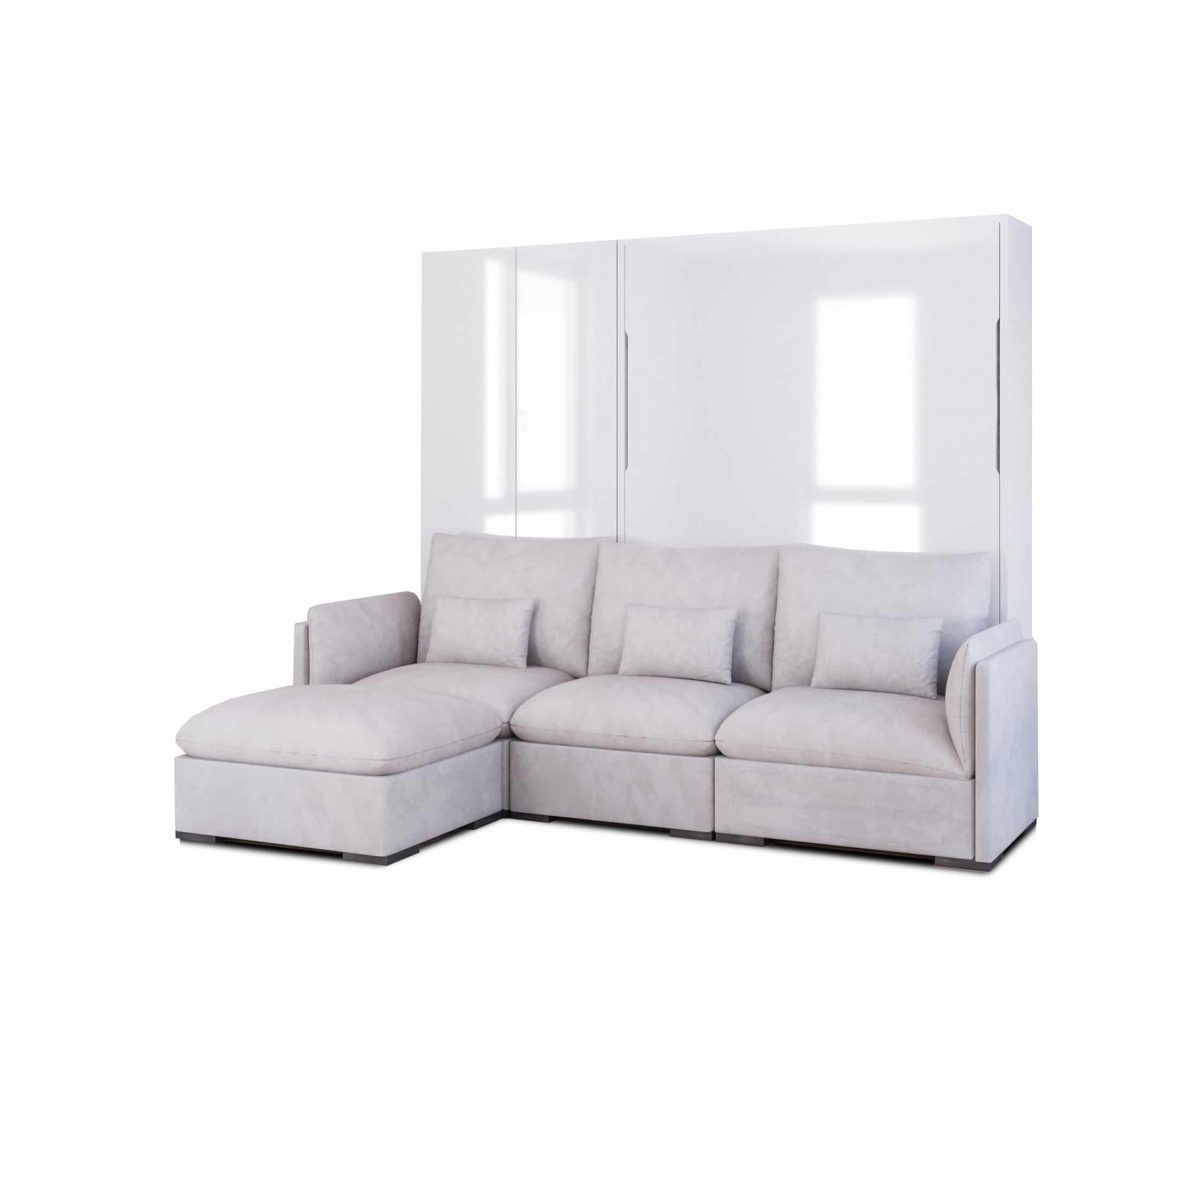 MurphySofa Adagio Sectional Ultra Plush Sofa Wall Bed 1 1200x1200 Cropped 